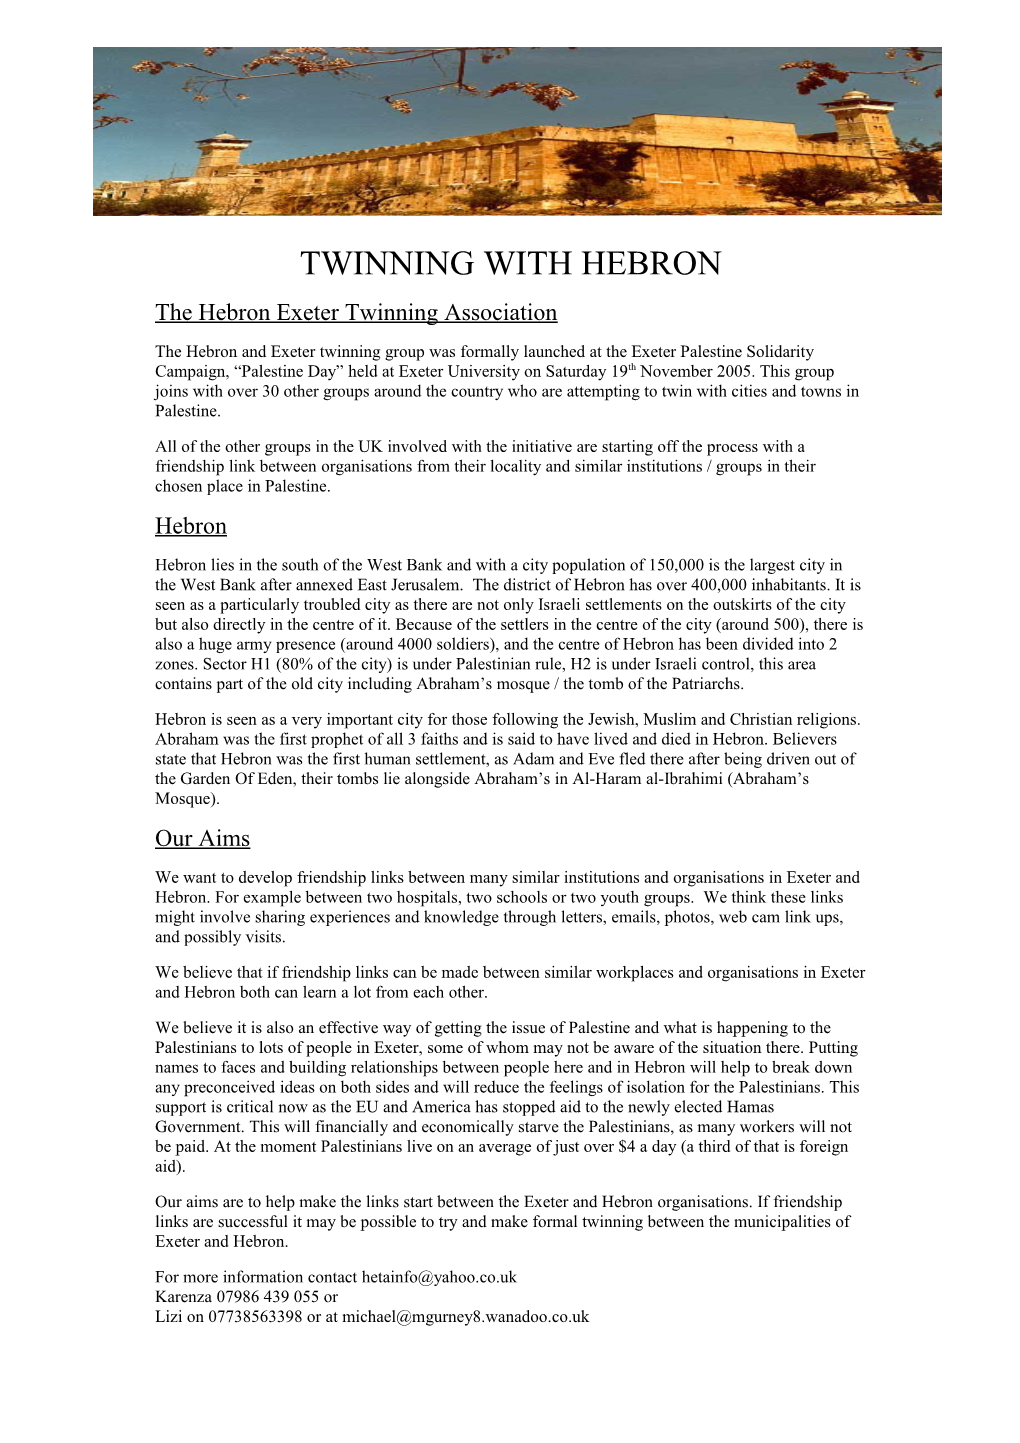 Twinning with Hebron